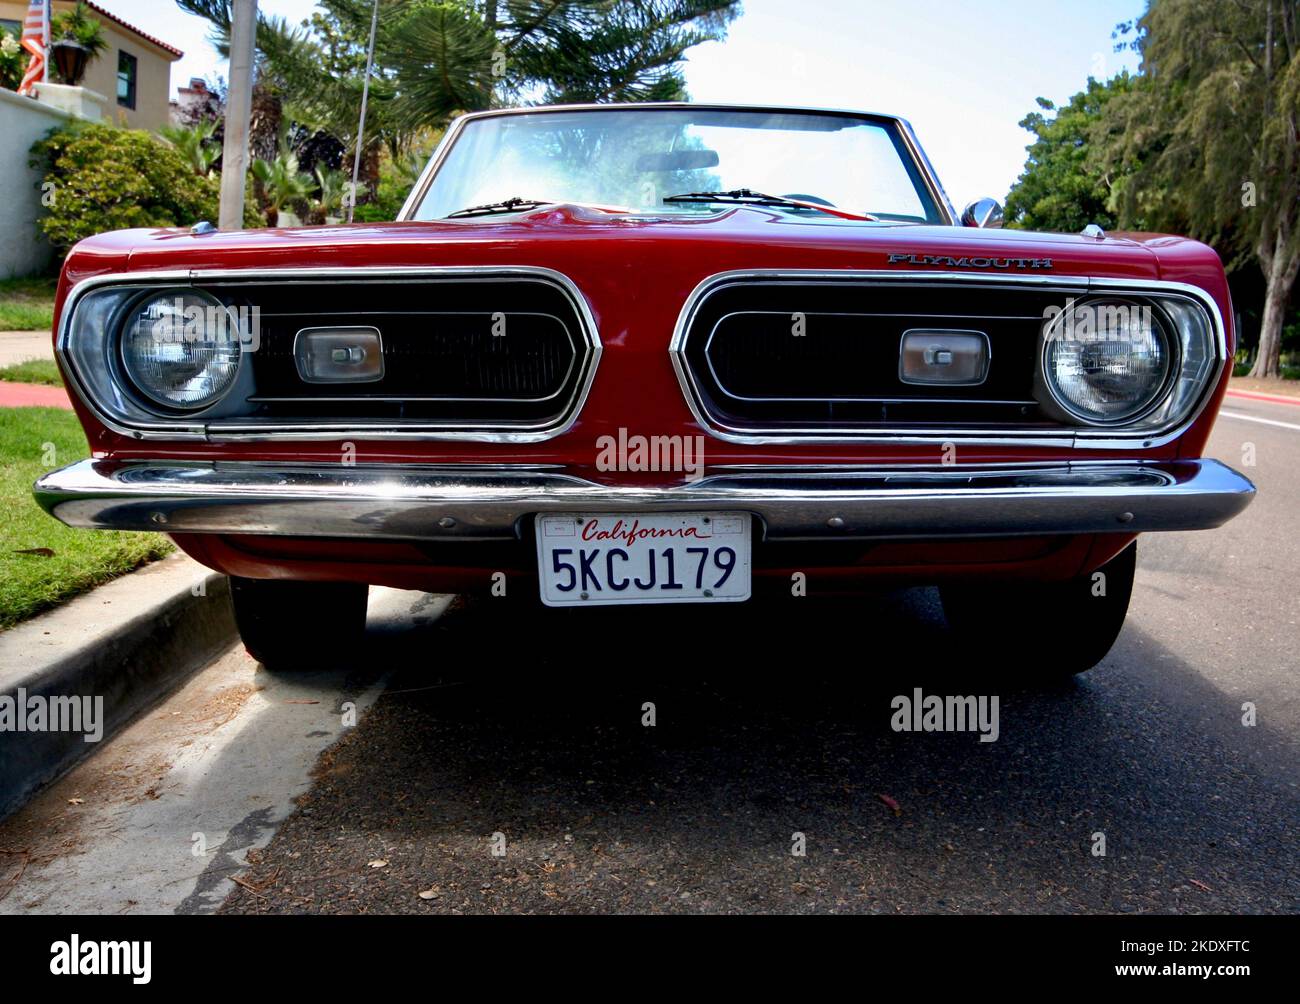 Classic red American car on a street in Coronado, California Stock Photo